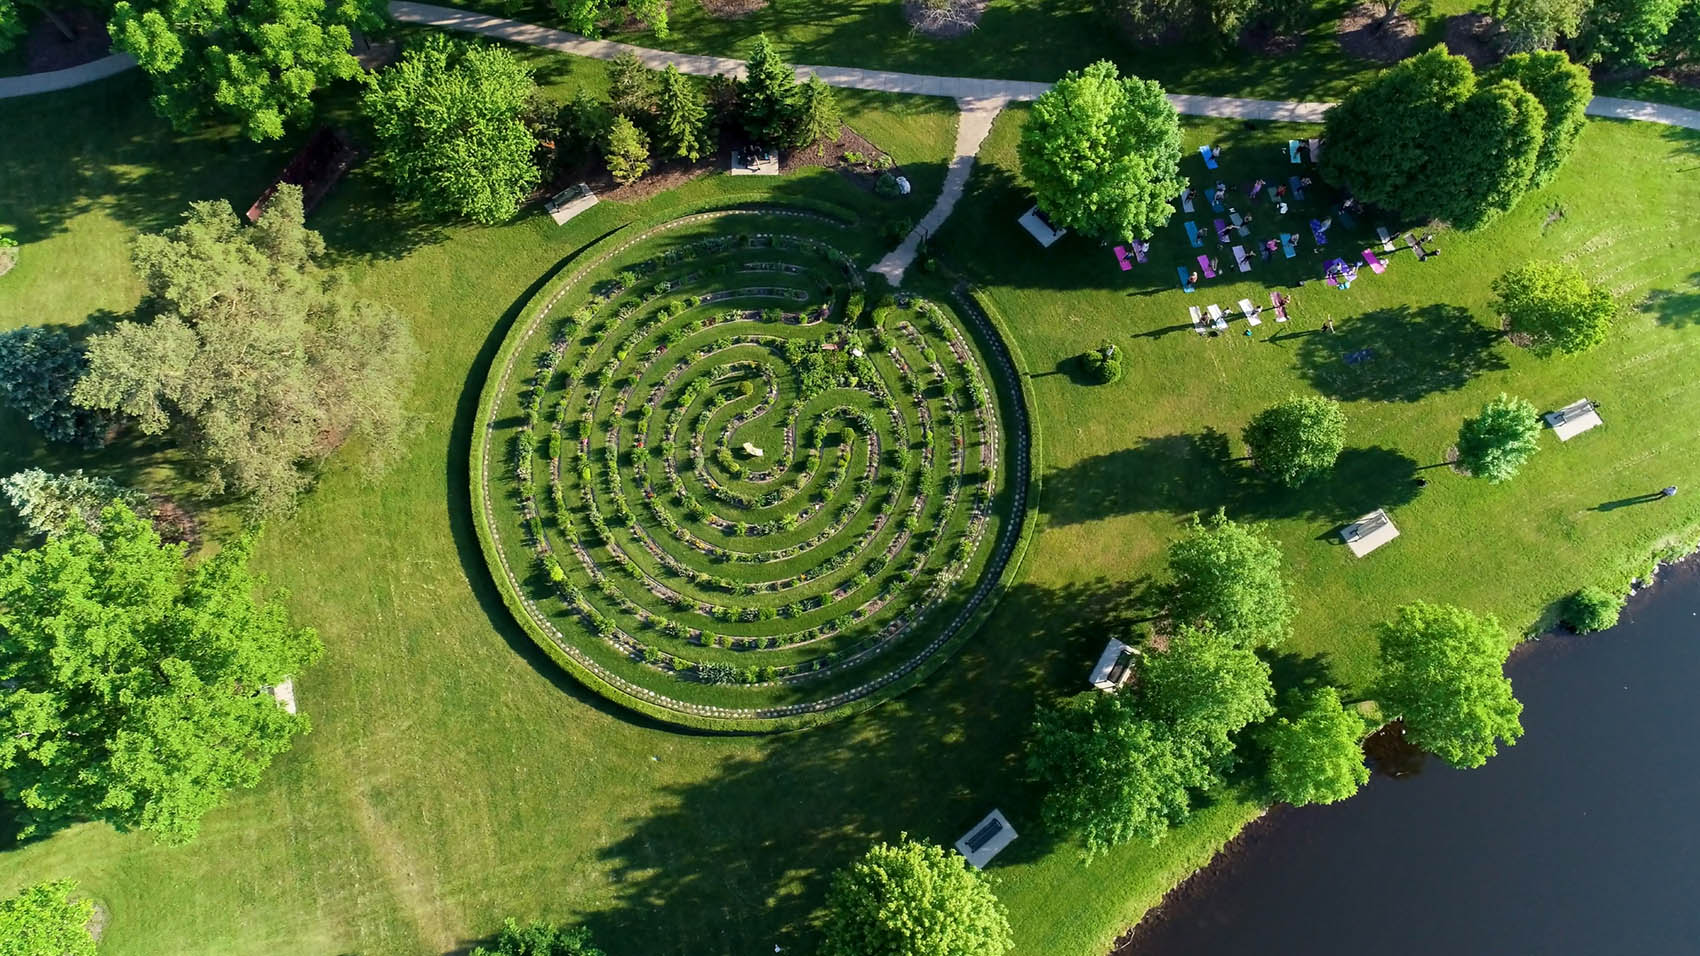 Regner Park Labyrinth Garden, summer activities in West Bend, Wisconsin